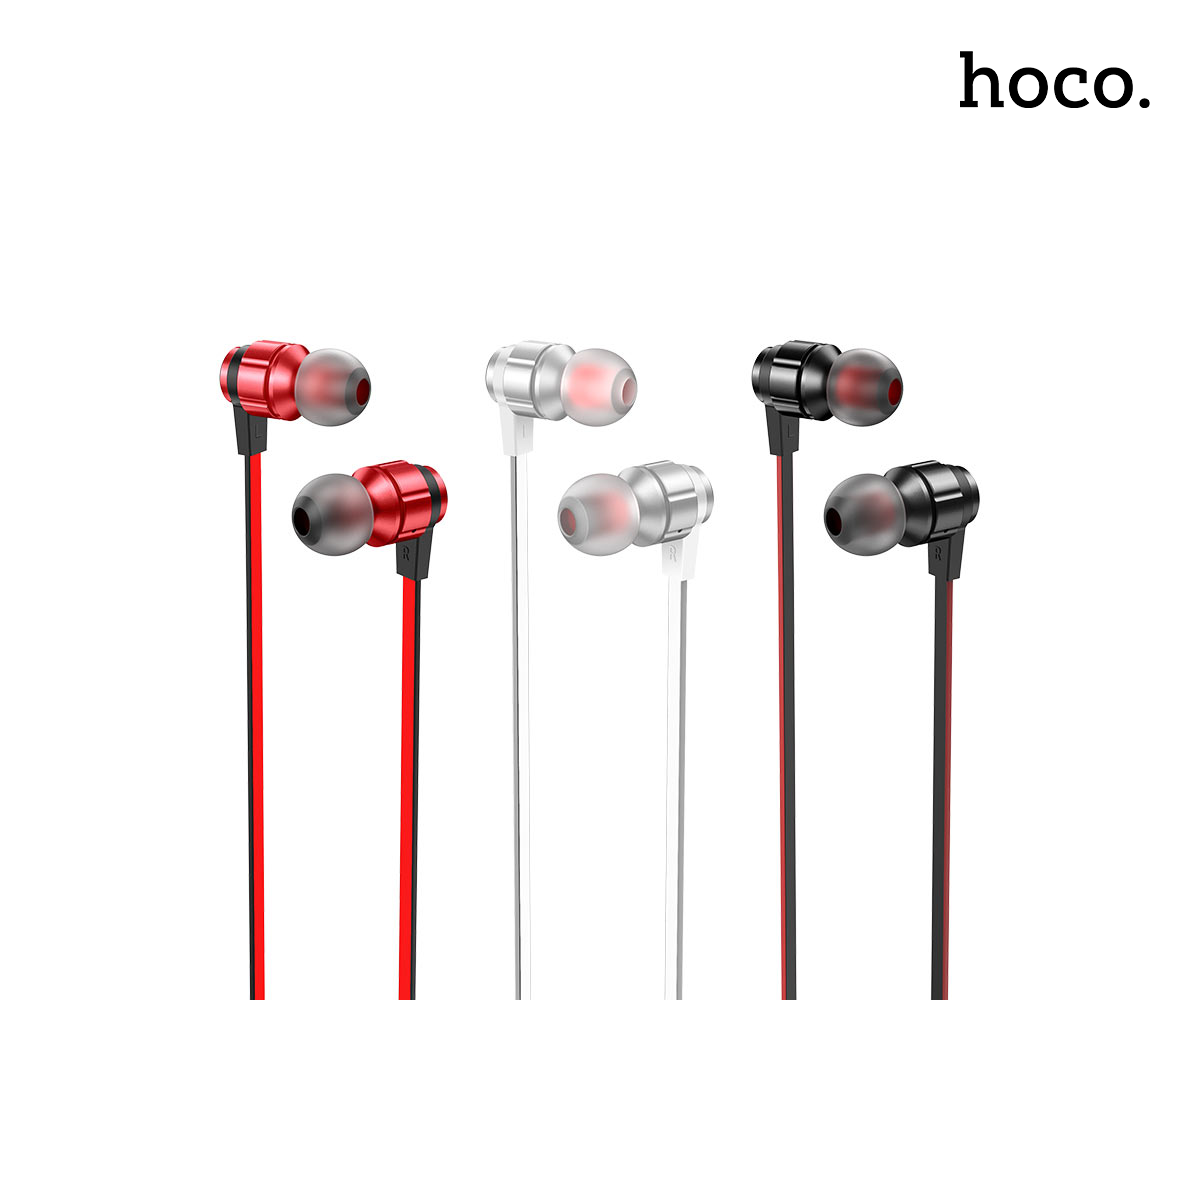 HOCO Platinum Sound Universal Earphone with Microphone – M85